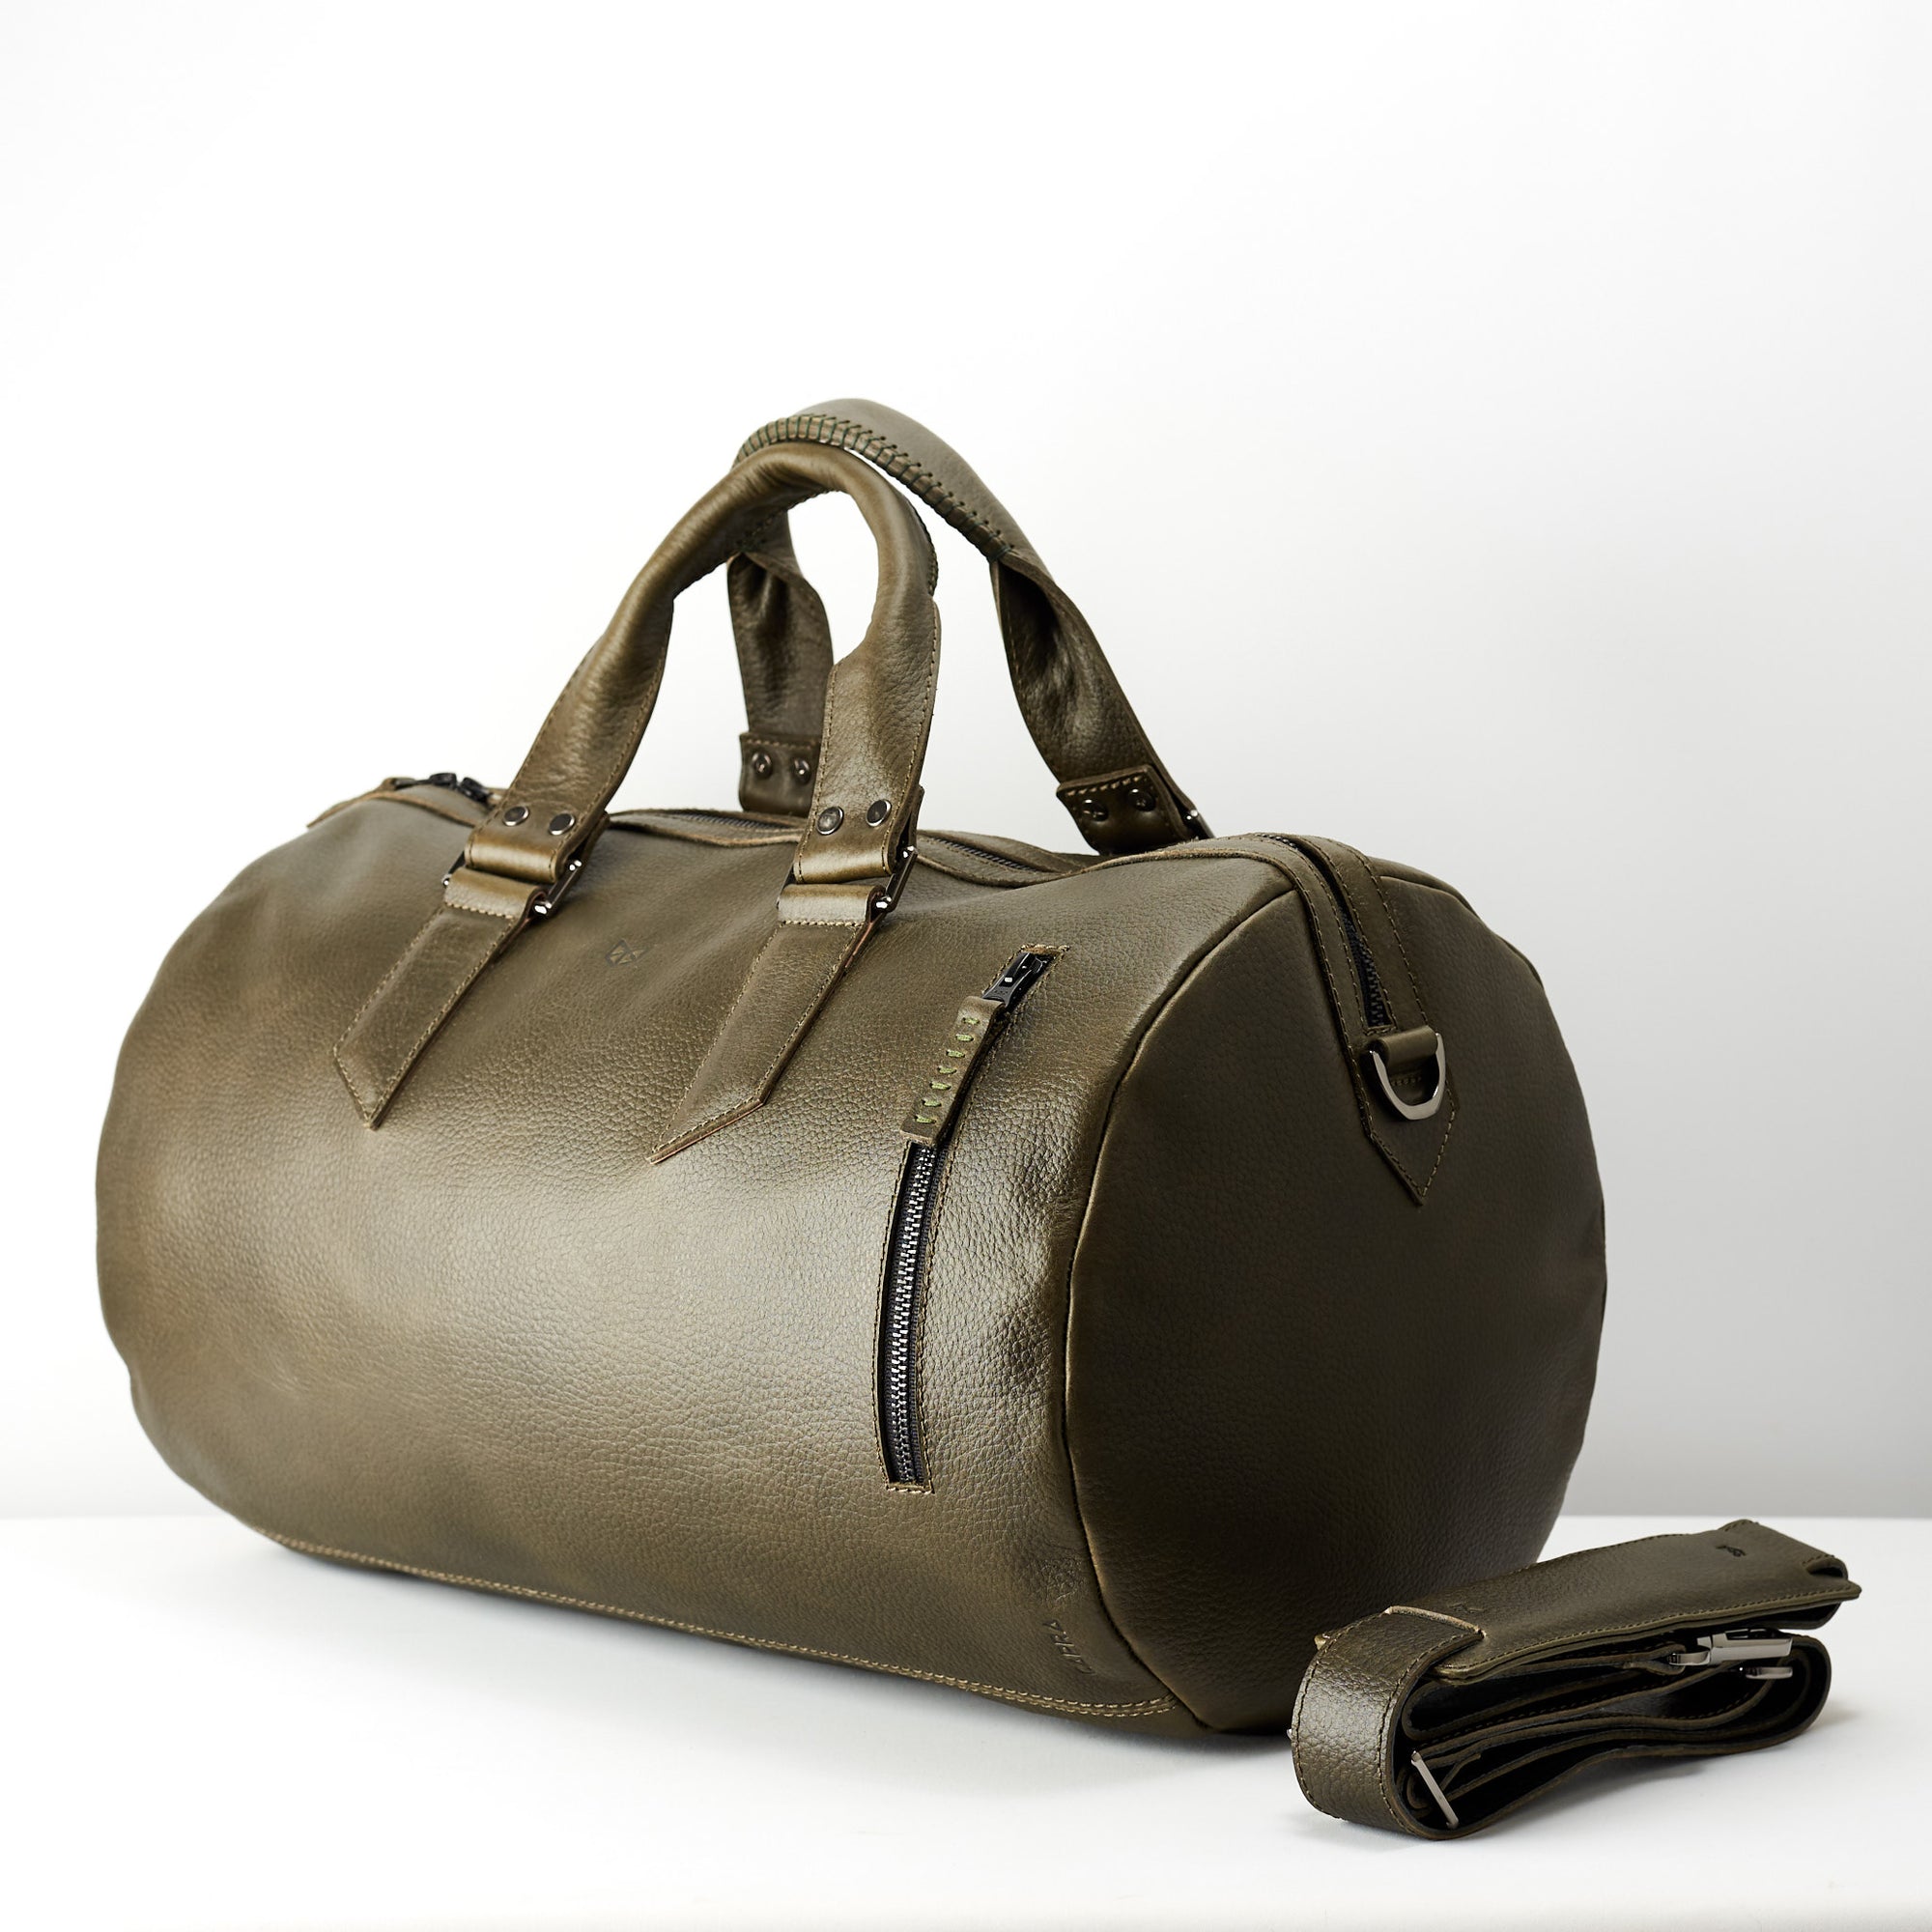 Duffle leather travel bag for men. Gym athletic bag 